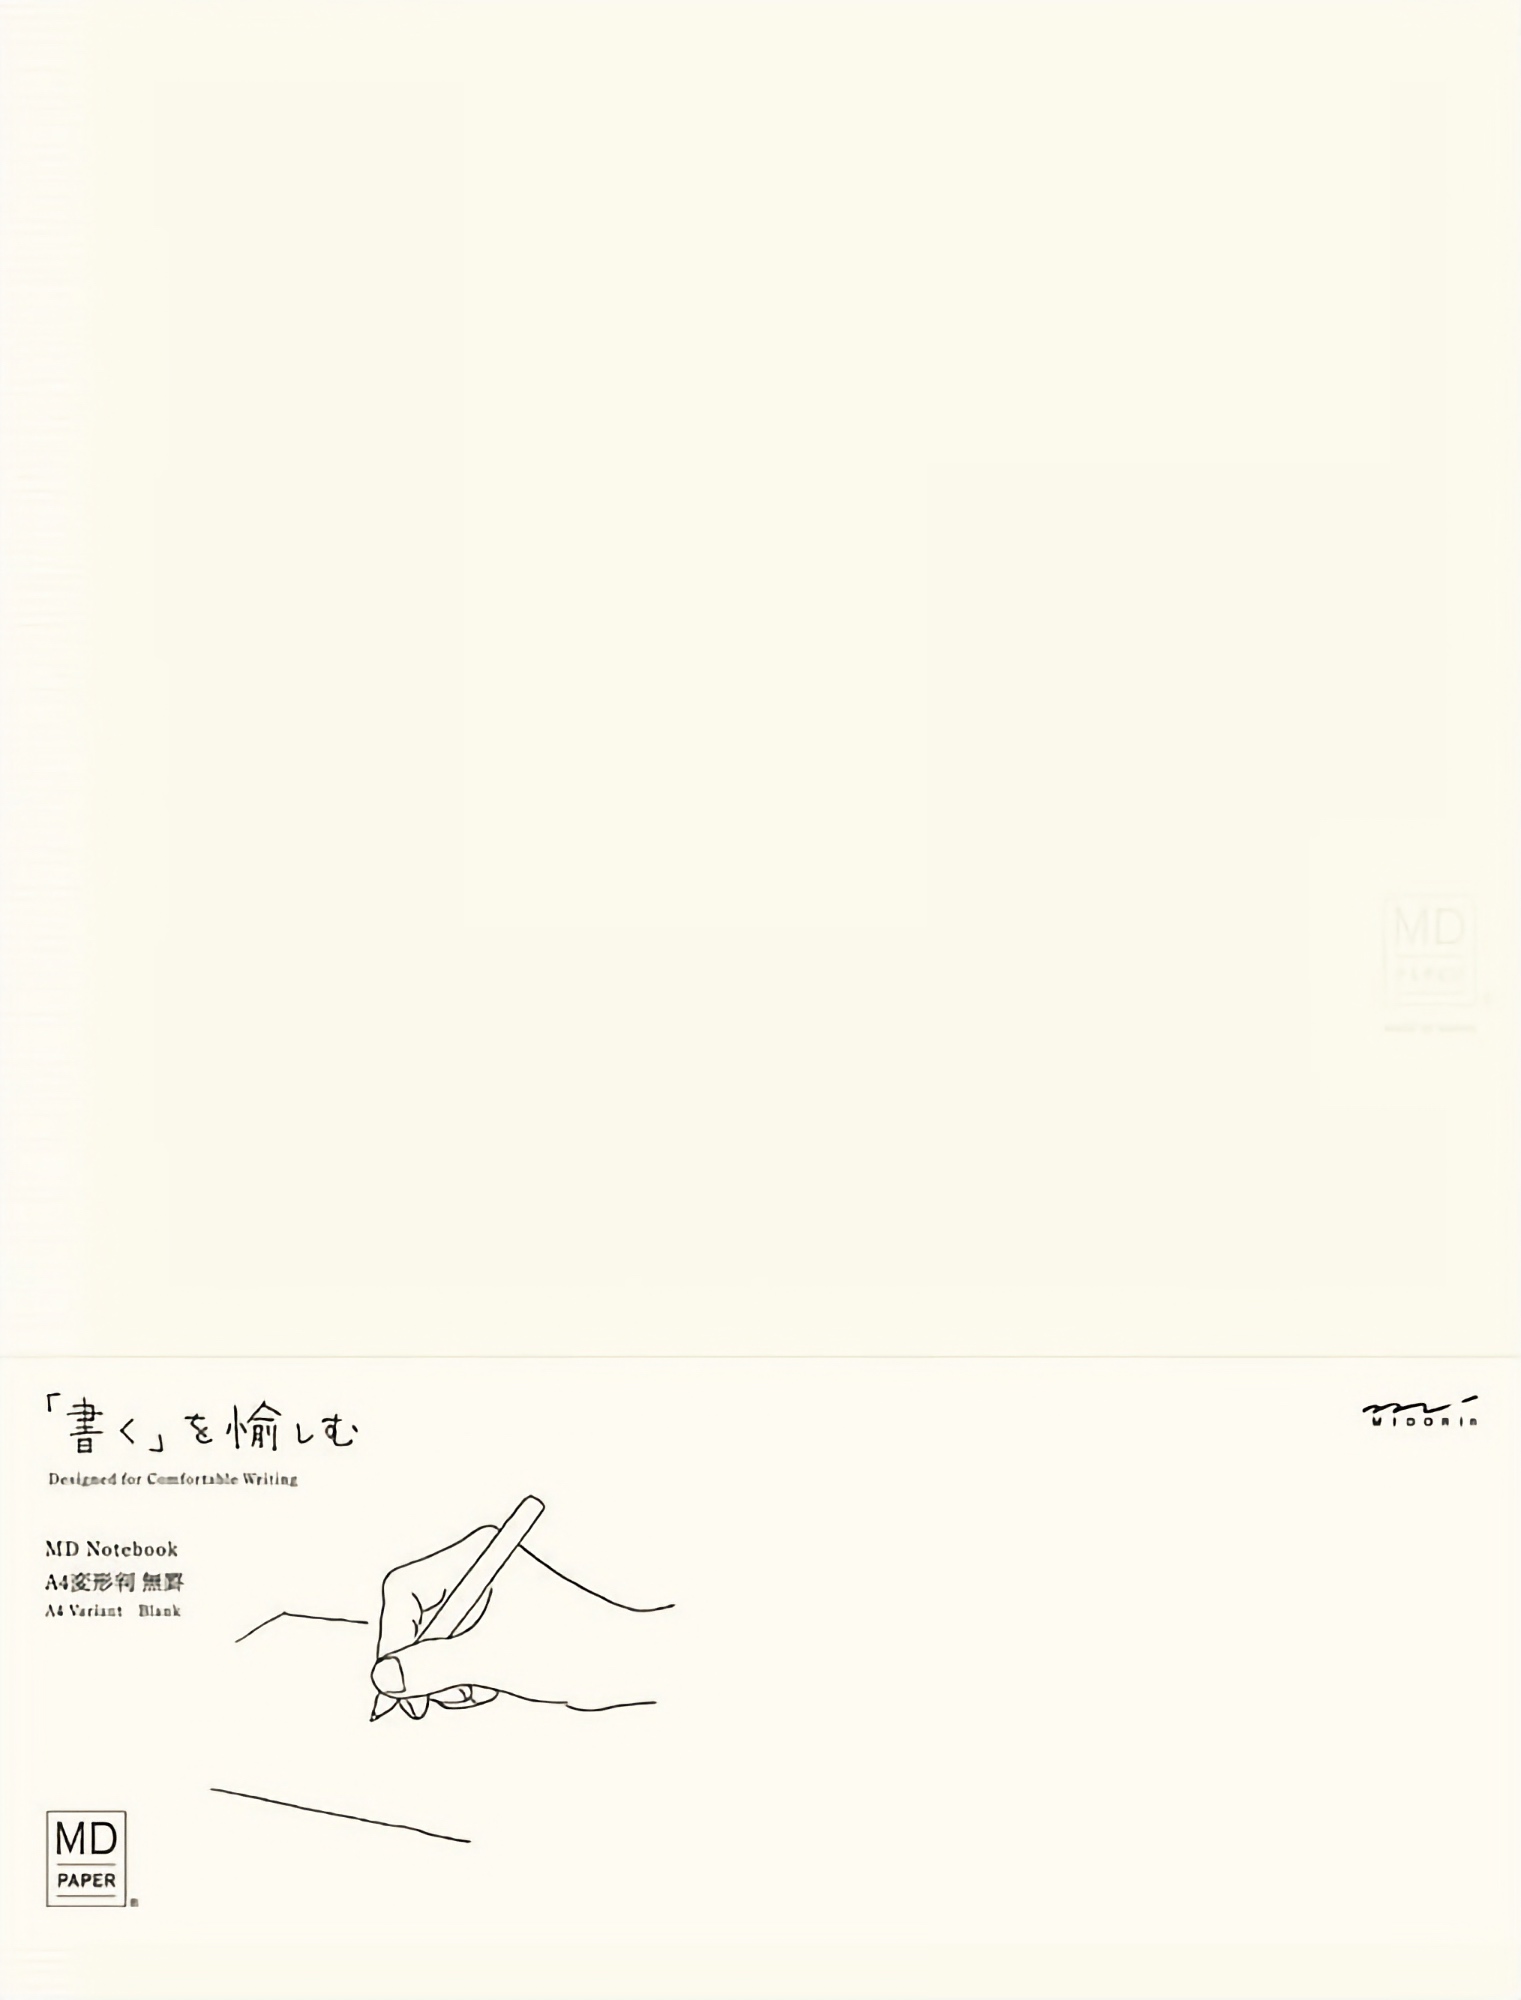 Midori MD Notebook [A4] Blank